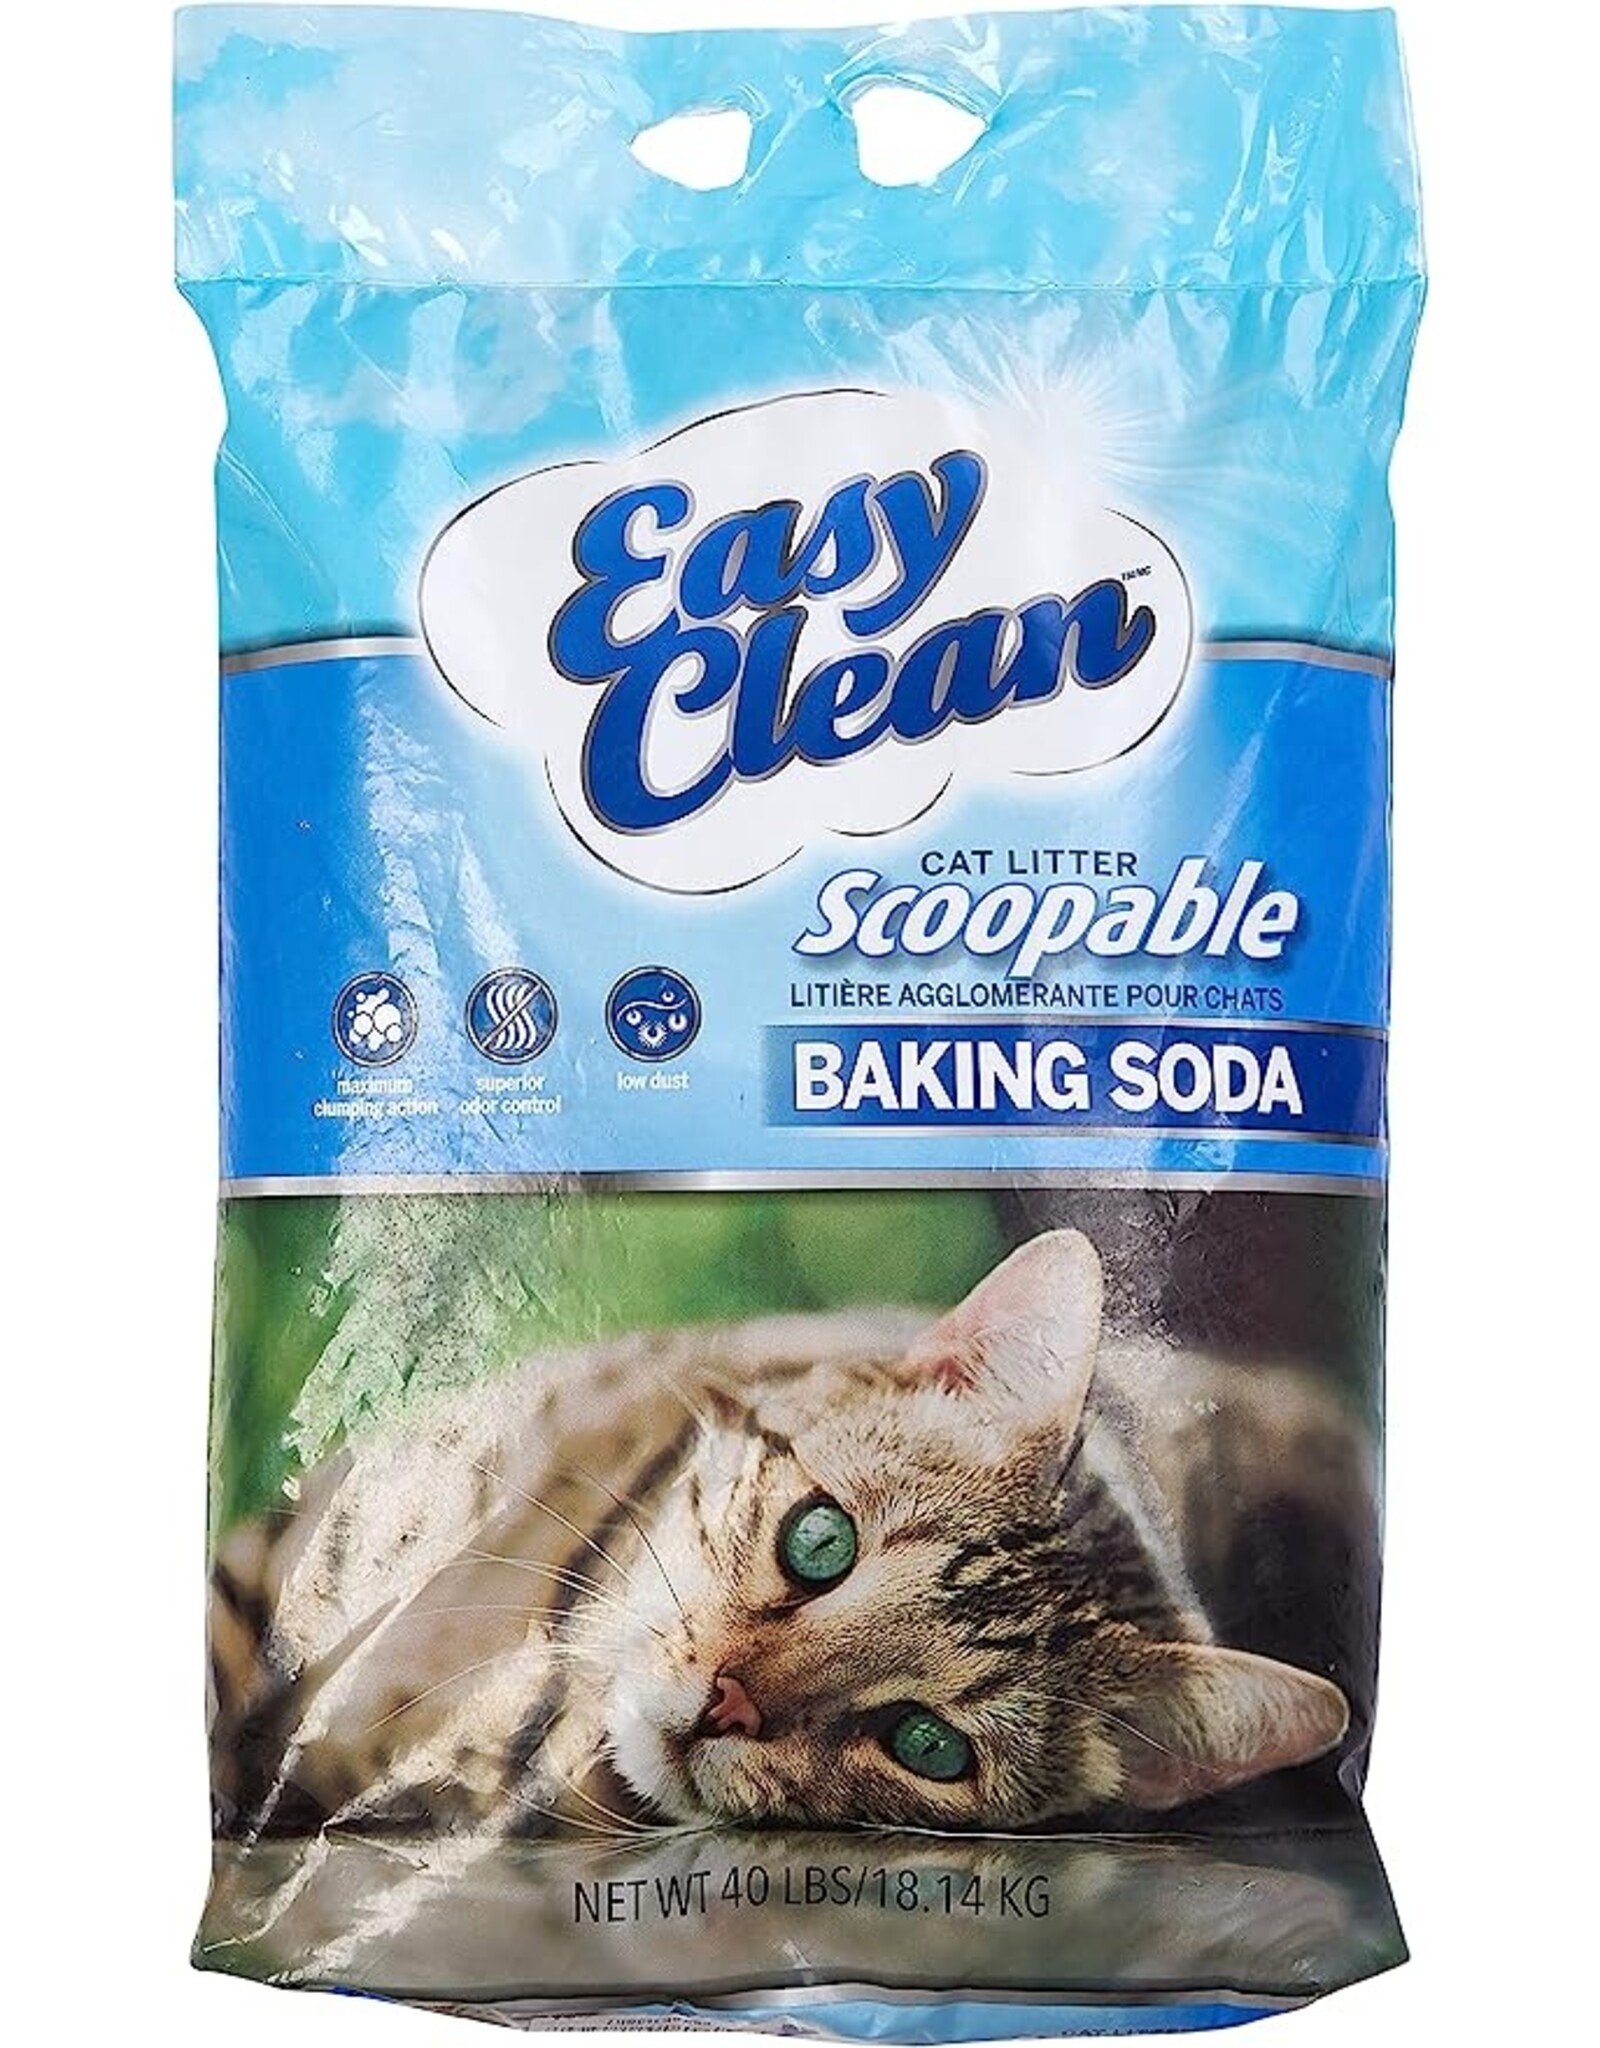 Easy Clean Baking Soda Clumping Litter 20 lb